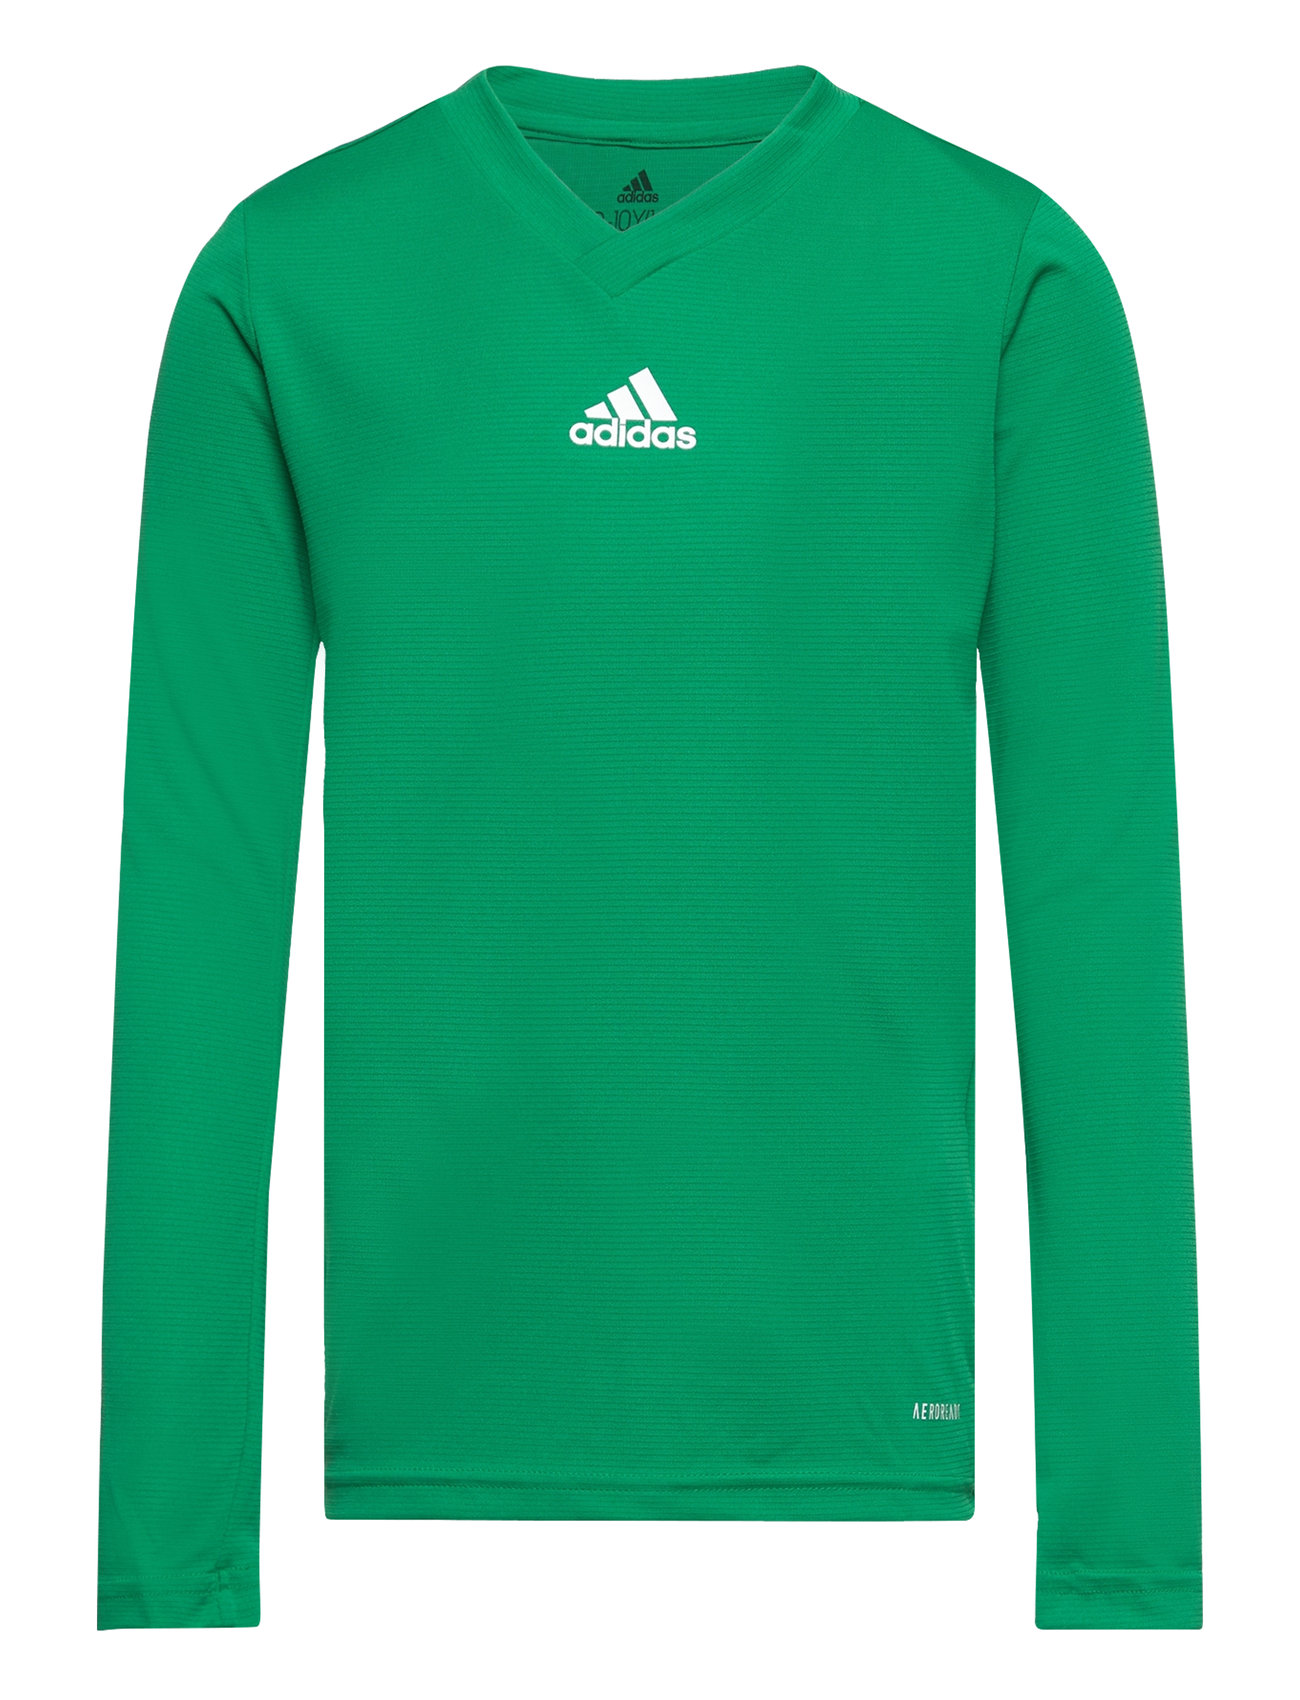 Team Base Tee Y Sport T-shirts Long-sleeved T-shirts Green Adidas Performance